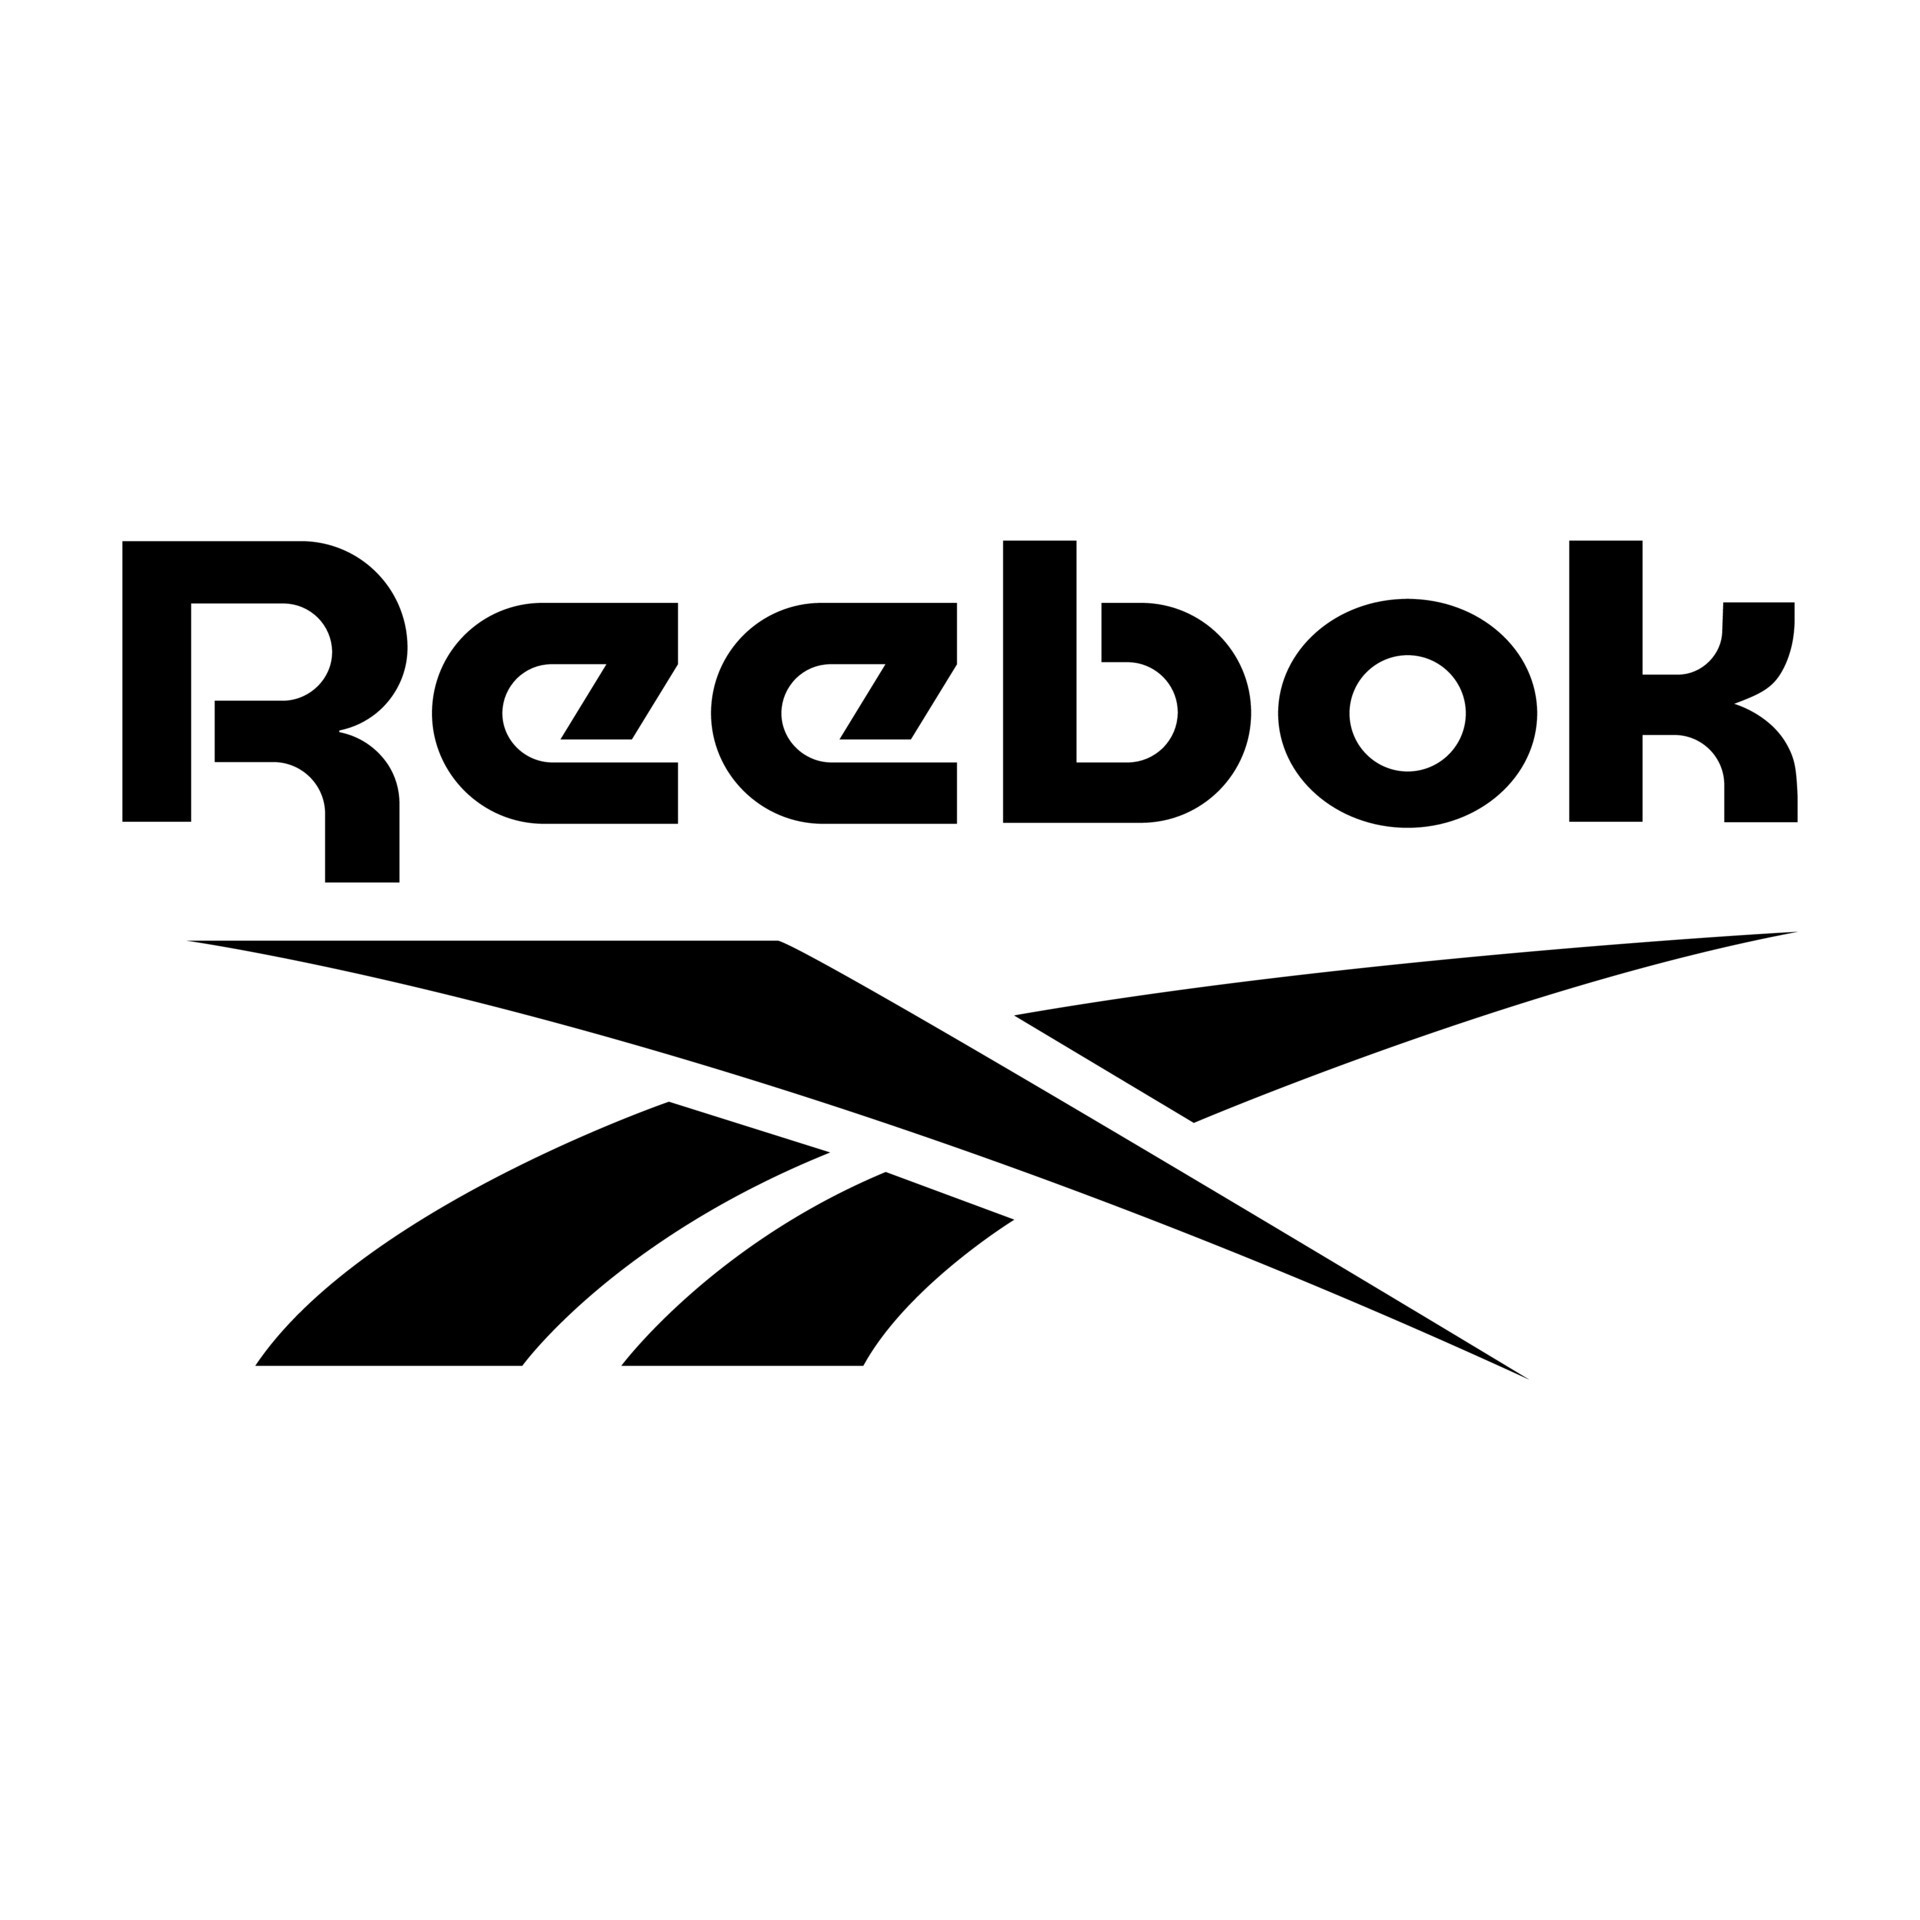 reebok logo. vecteur illustration 21963705 Art vectoriel chez Vecteezy